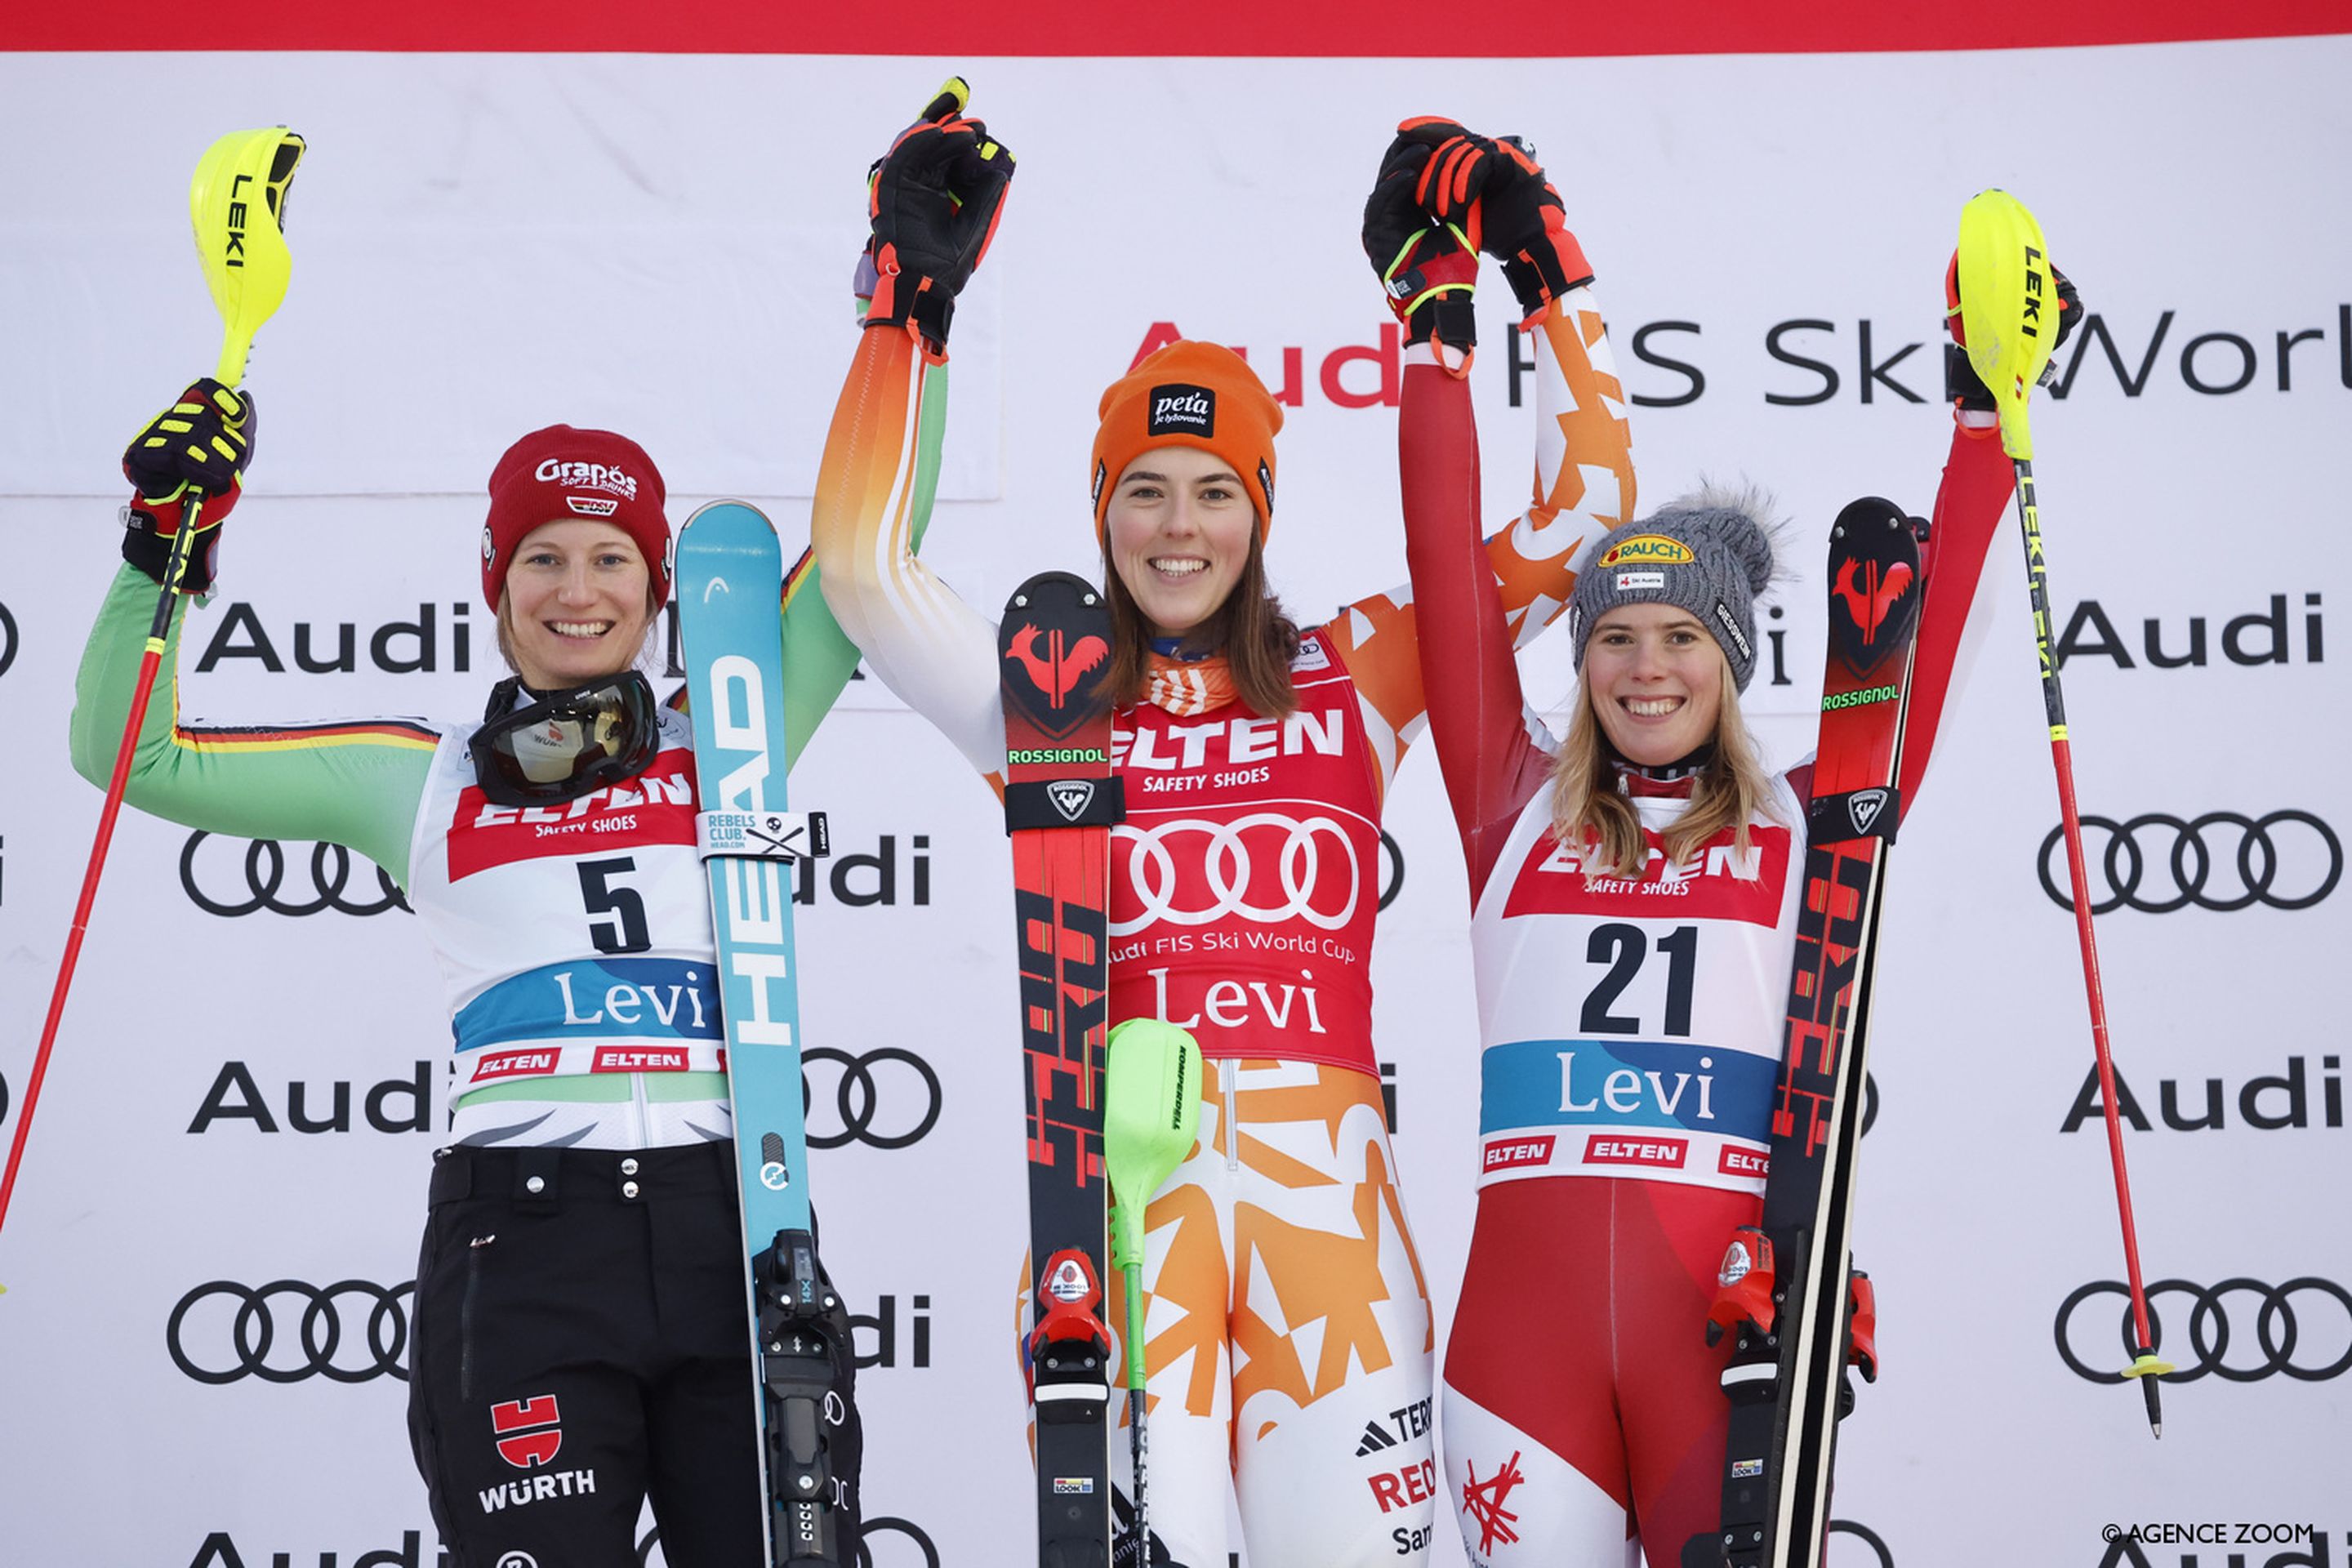 A superb start to the slalom season for Vlhova, Duerr and Liensberger @AgenceZoom